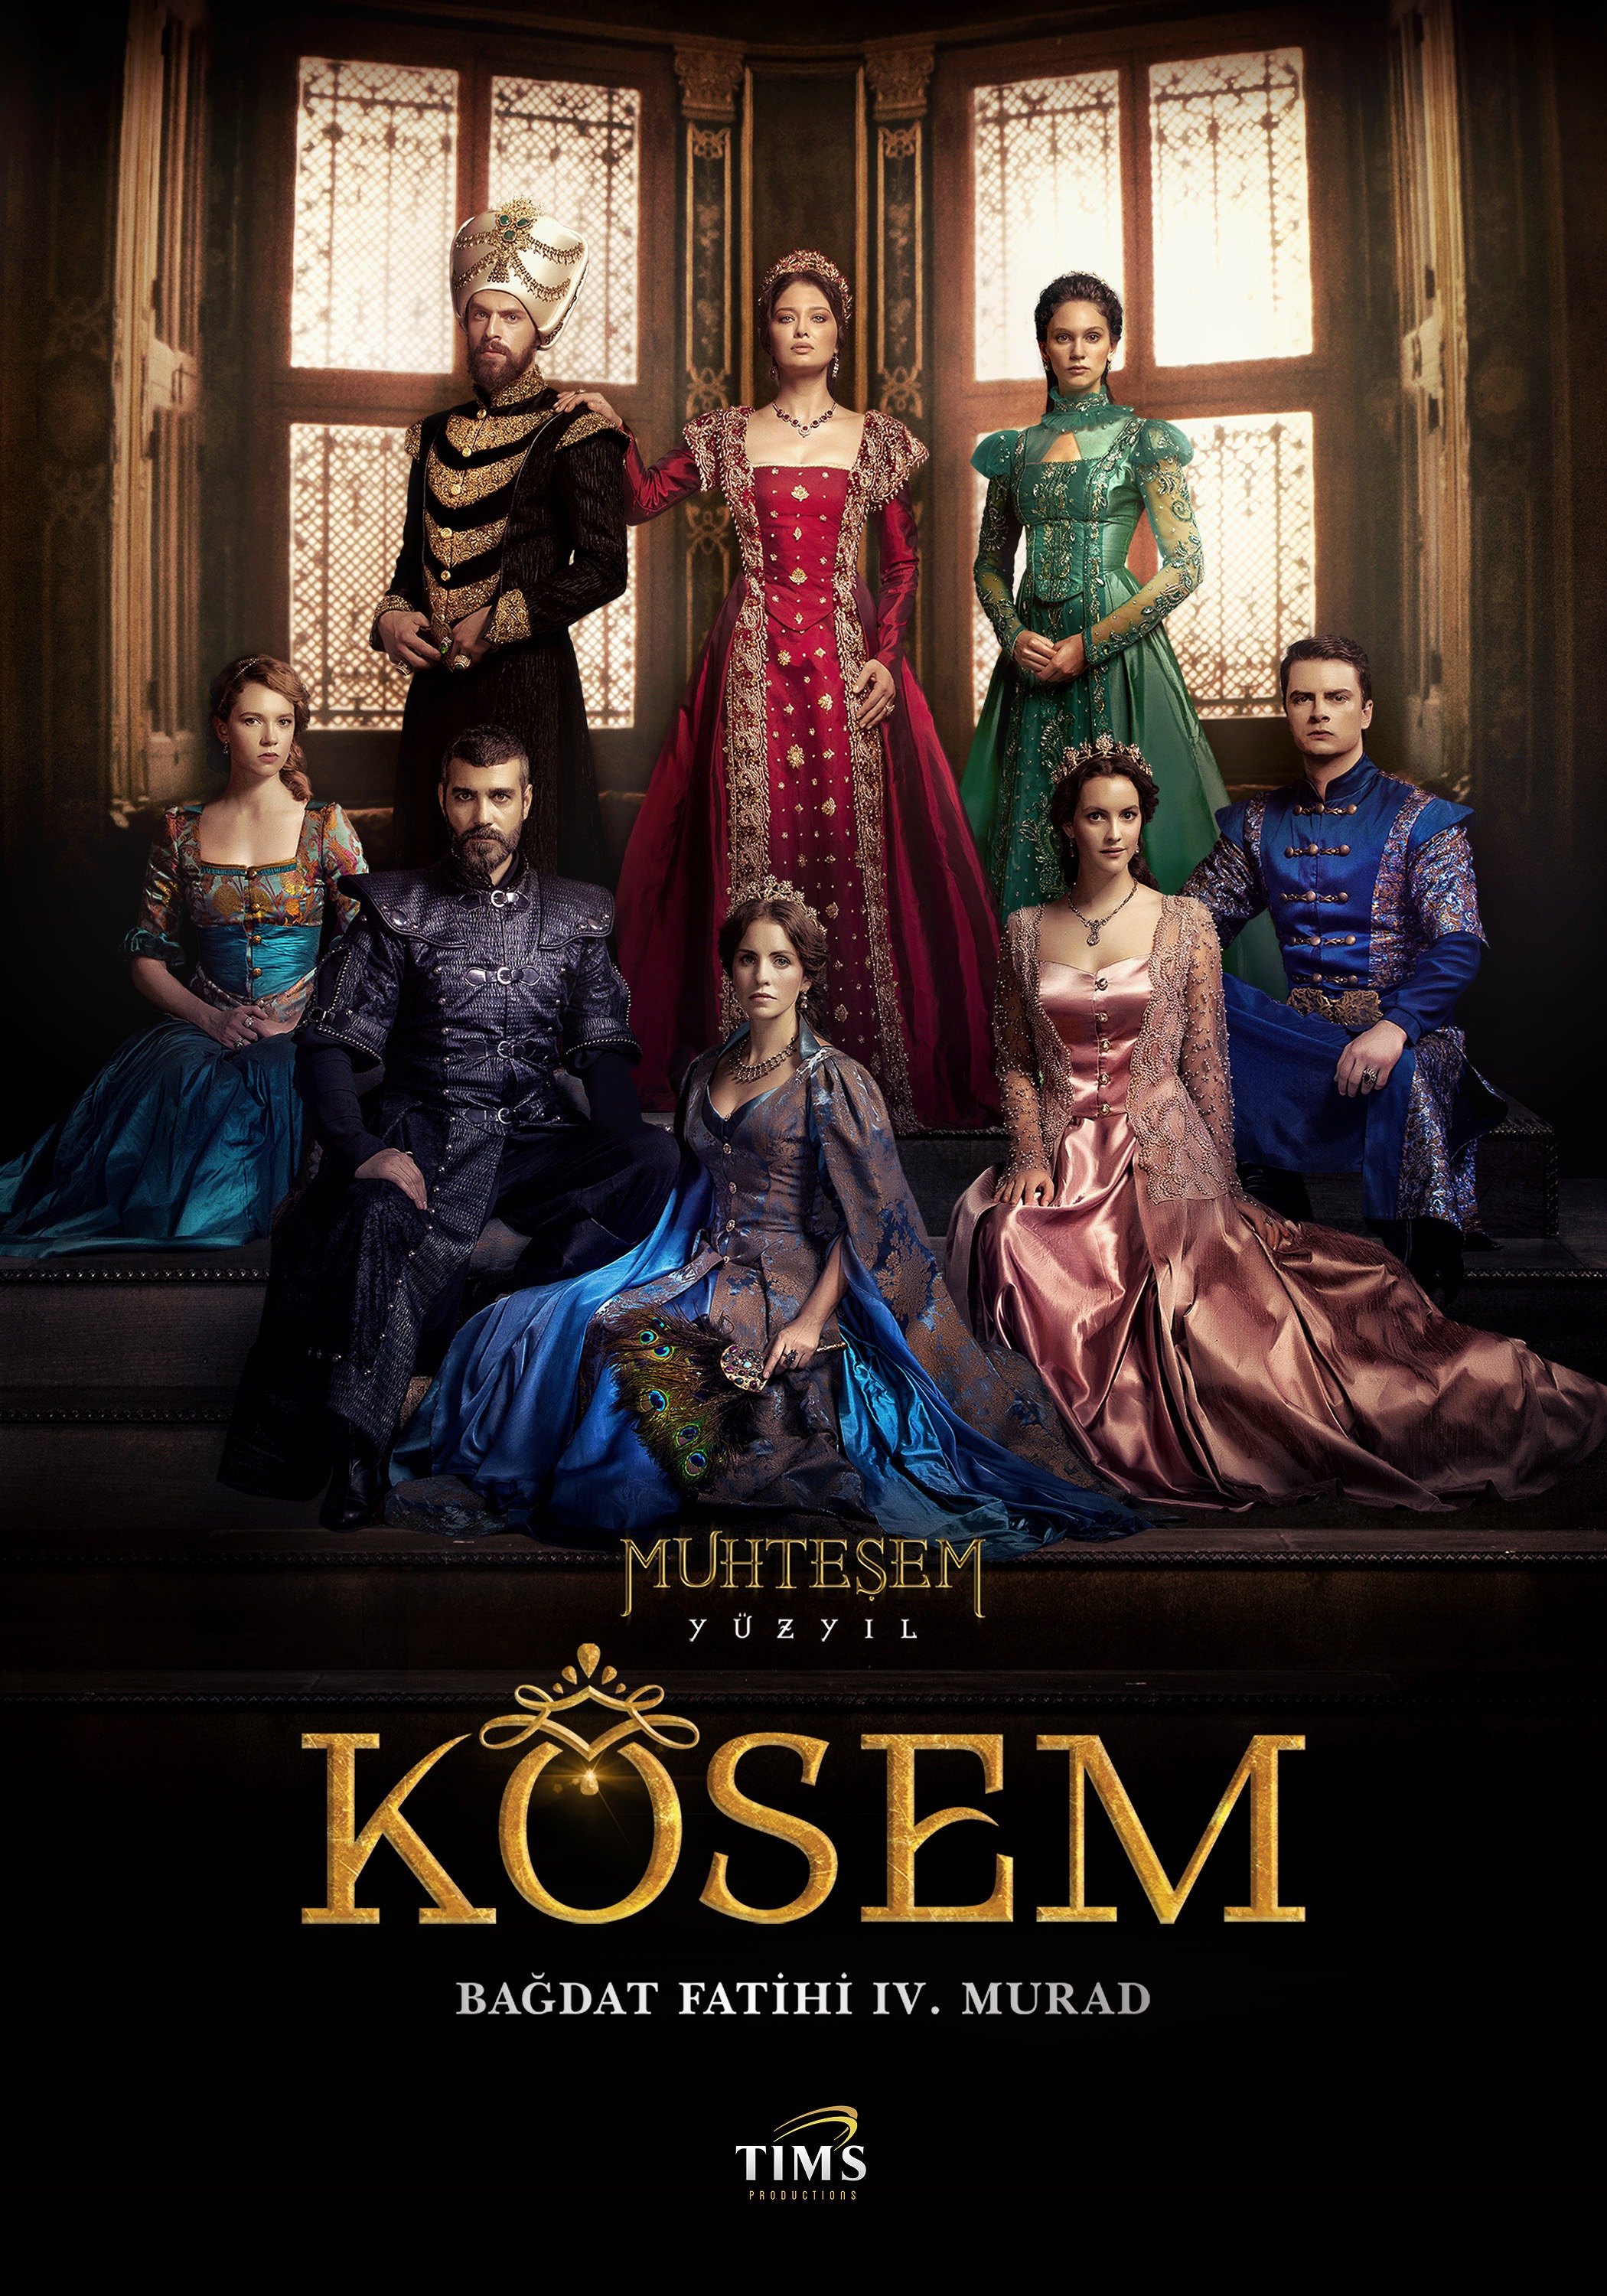 Mega Sized TV Poster Image for Muhtesem Yüzyil: Kösem (#1 of 10)